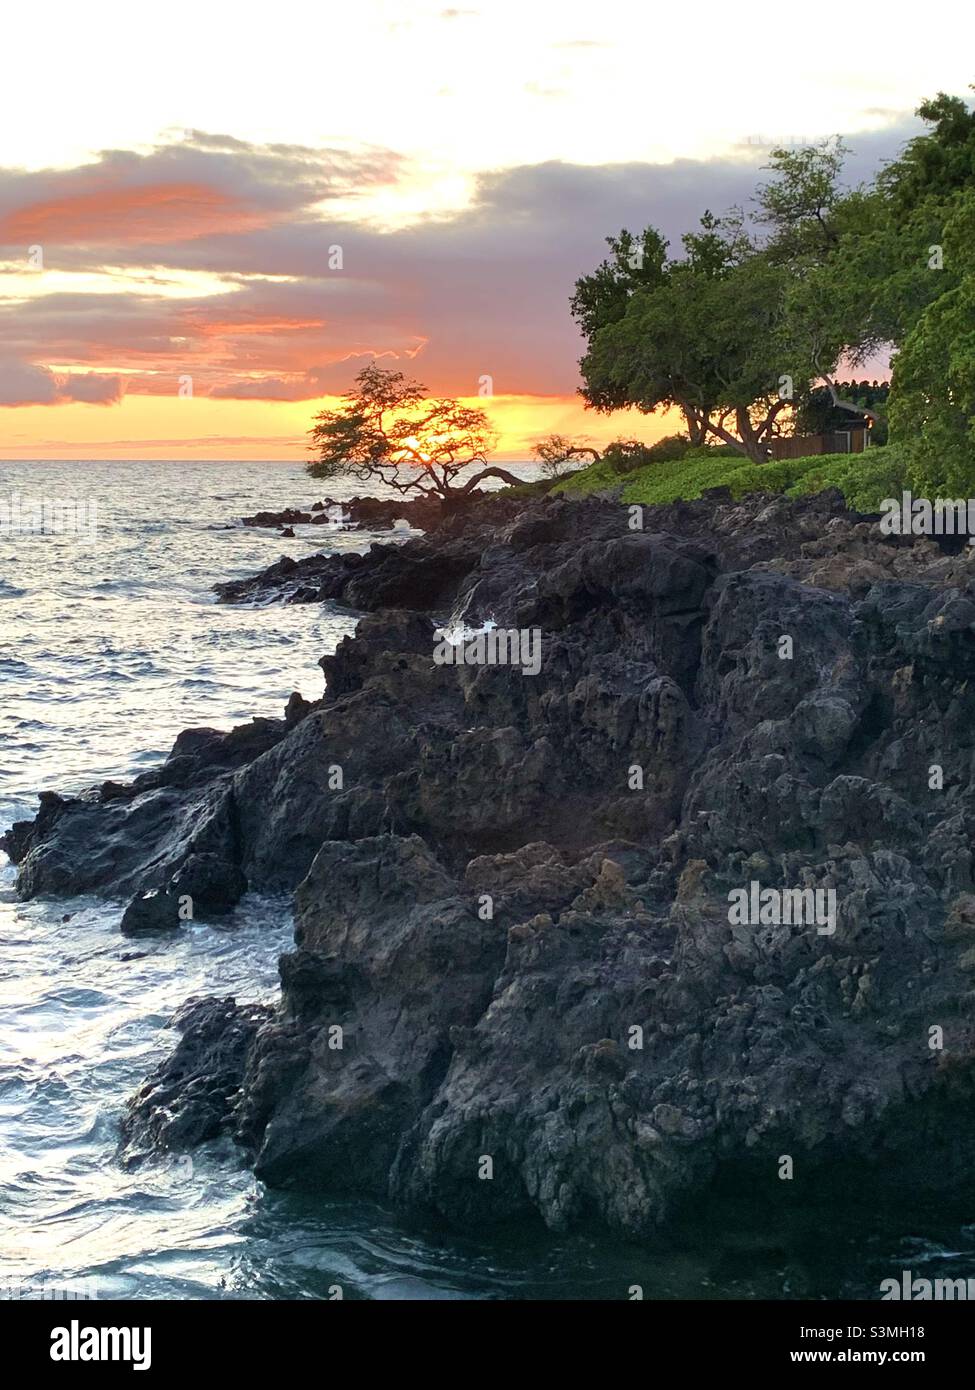 Big island Hawaii night snorkeling at sunset Stock Photo